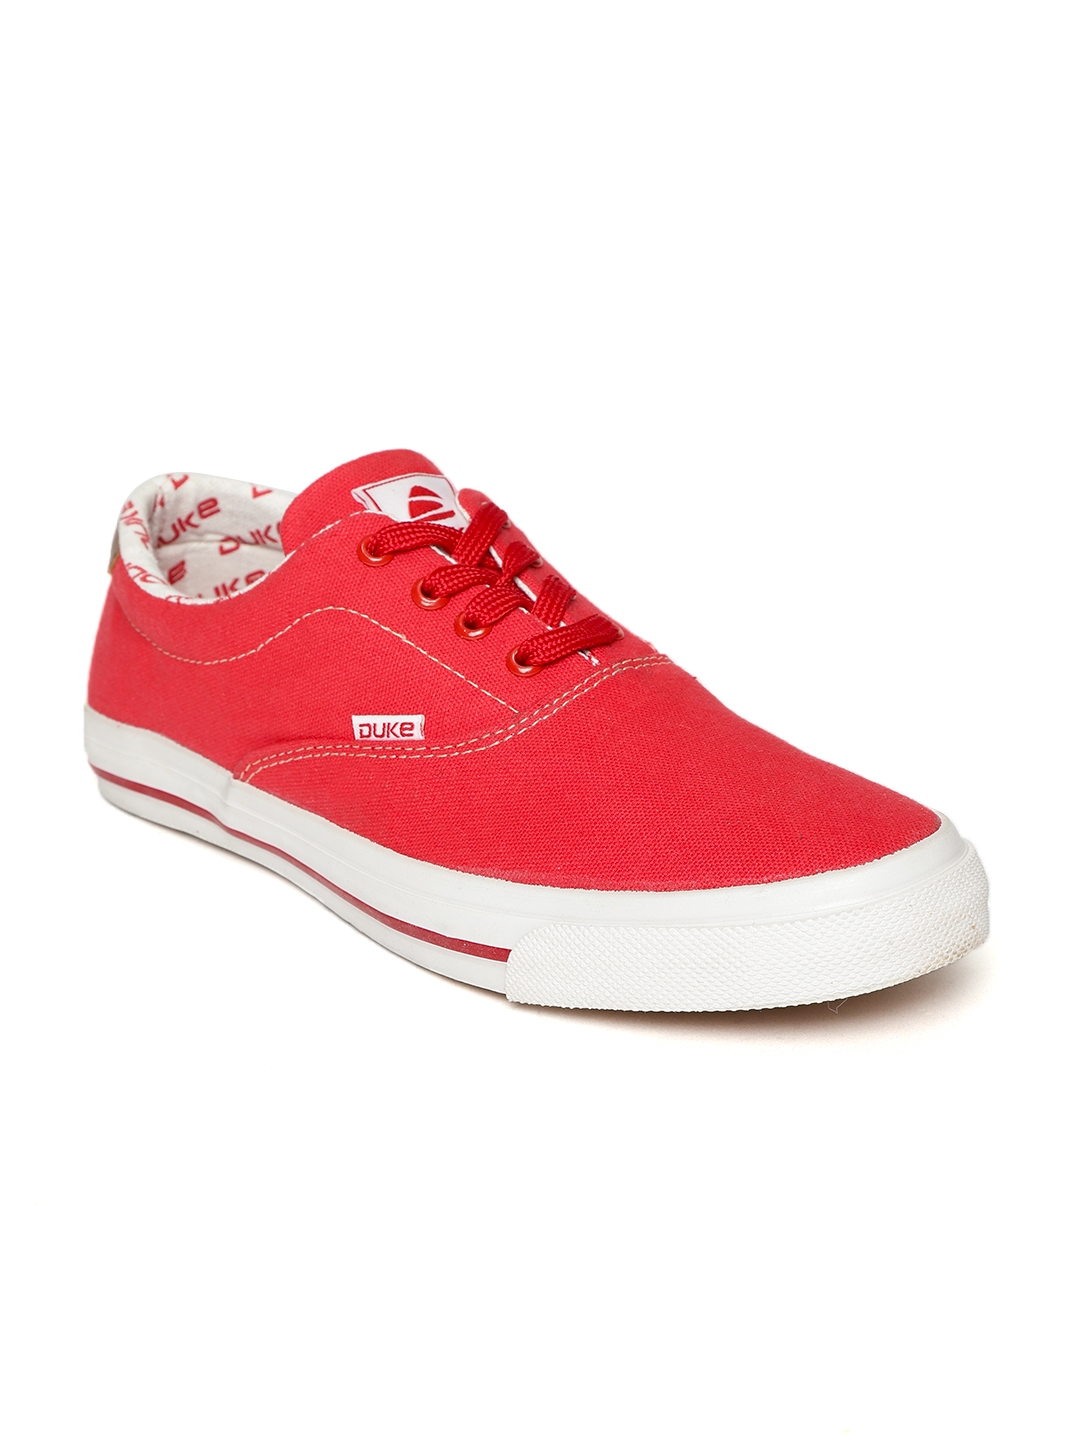 Buy Duke Men Red Sneakers - Casual Shoes for Men 9105199 | Myntra